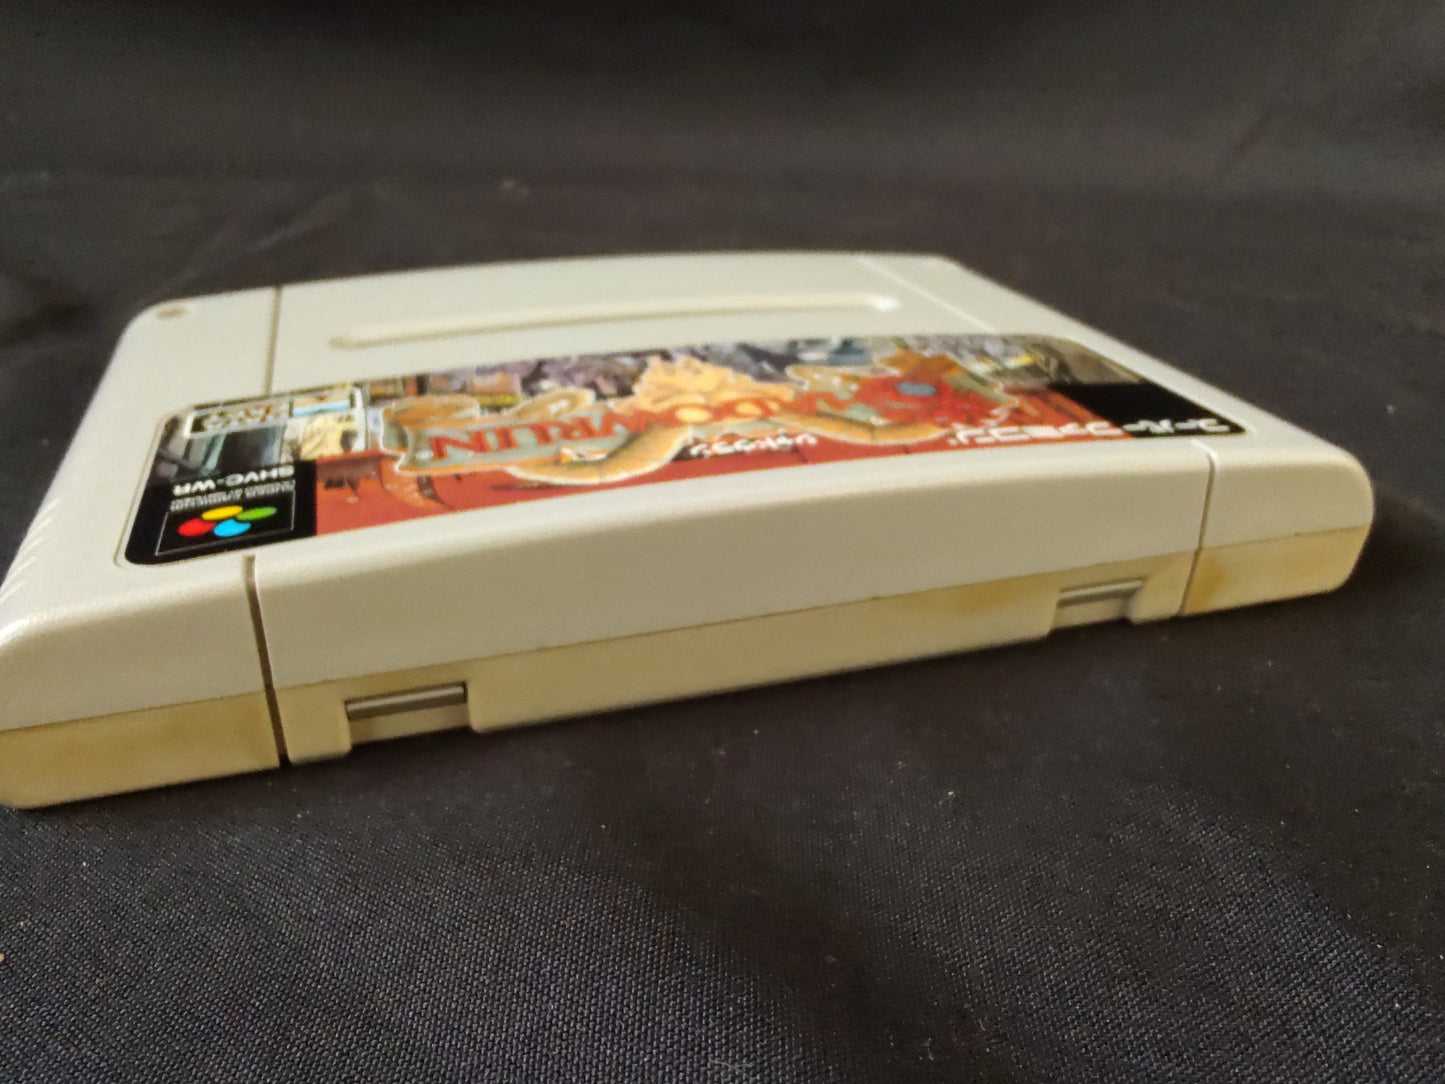 Shadowrun JP Ver. Nintendo Super Famicom SNES Cartrige, Working-f0903-